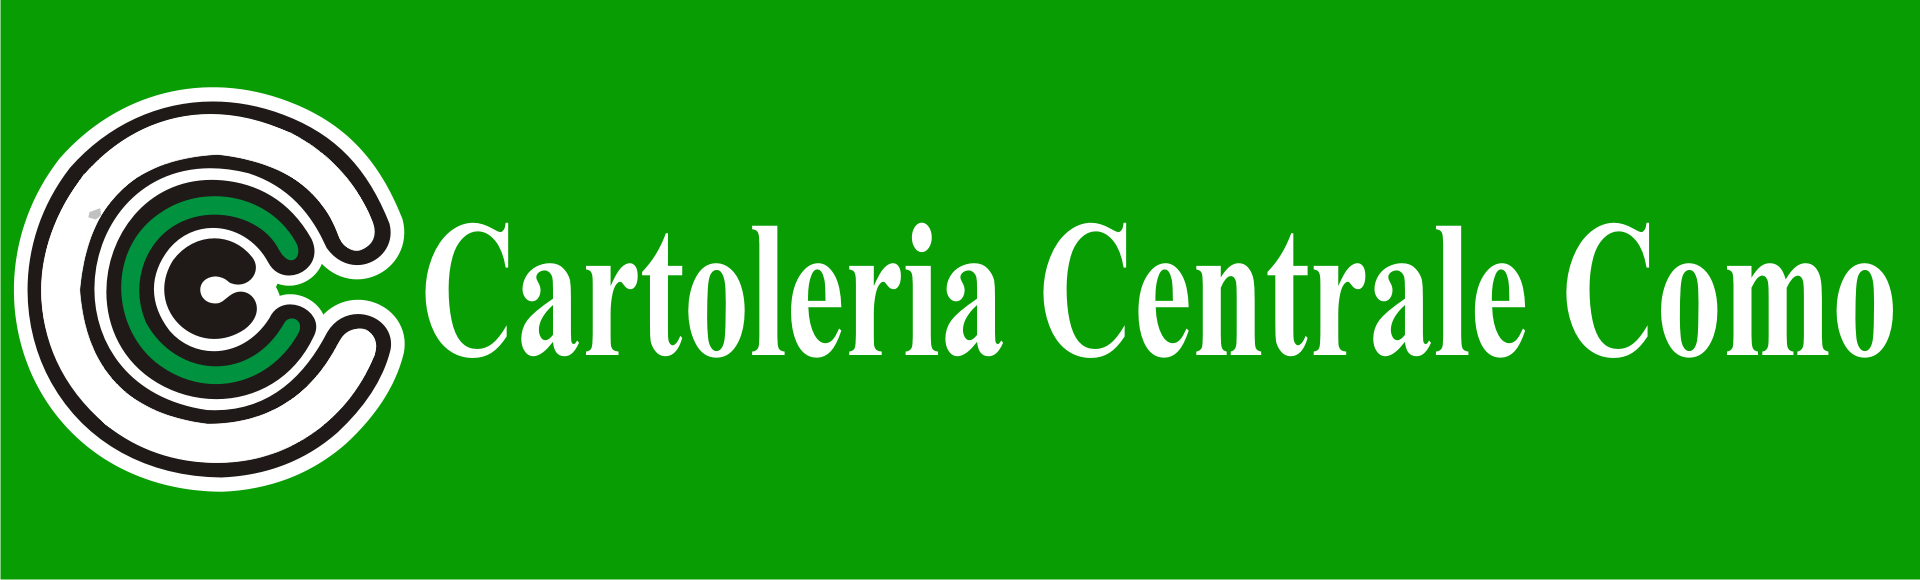 CARTOLERIA CENTRALE - LOGO